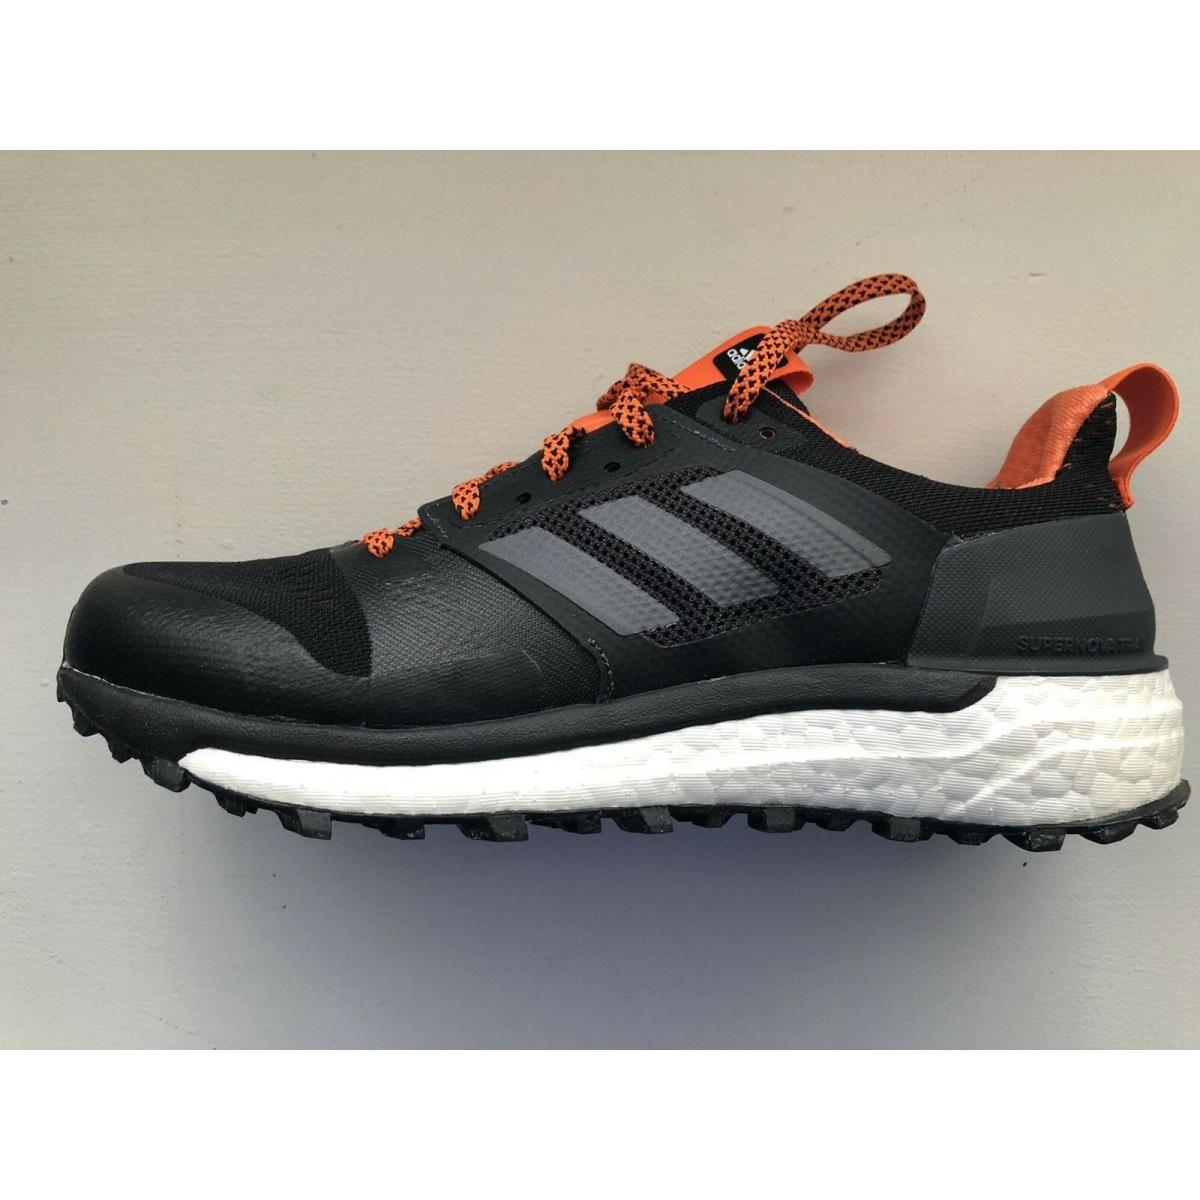 Adidas Supernova Boost Trail Athletic Shoe Black Orange Men`s 692740683164 - Adidas shoes Boost - Black/ orange | SporTipTop